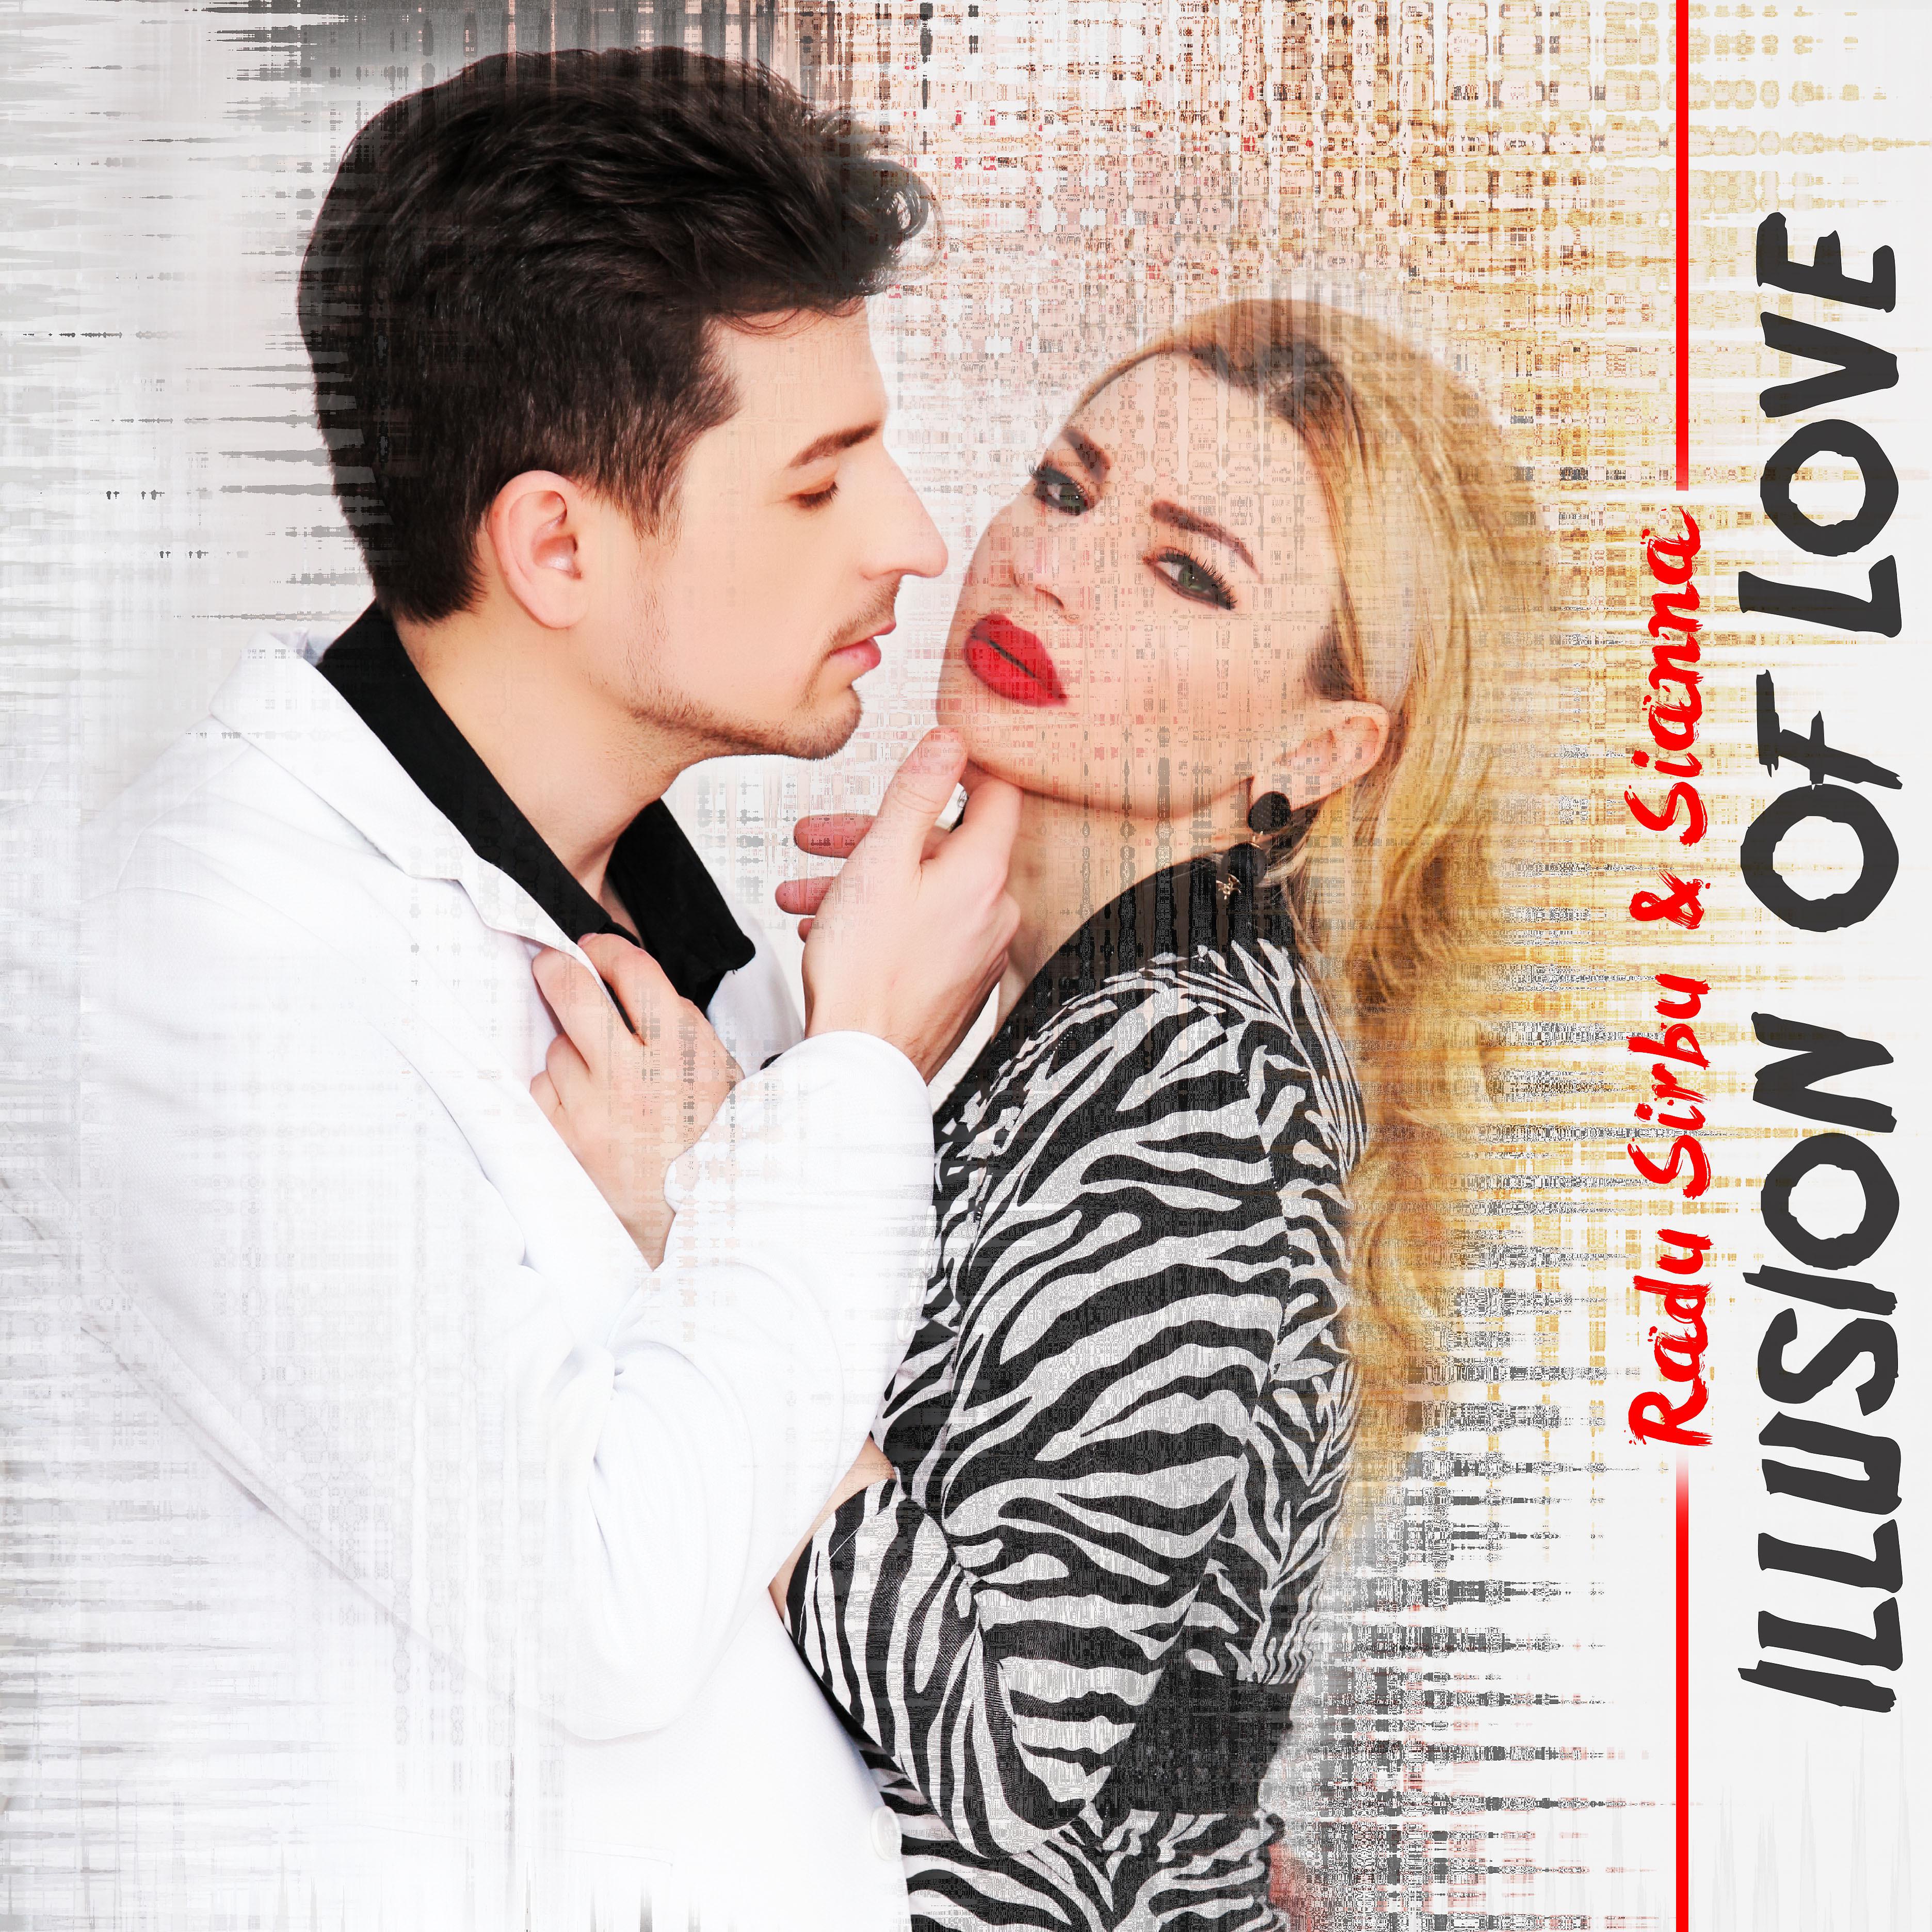 Постер альбома Illusion of Love